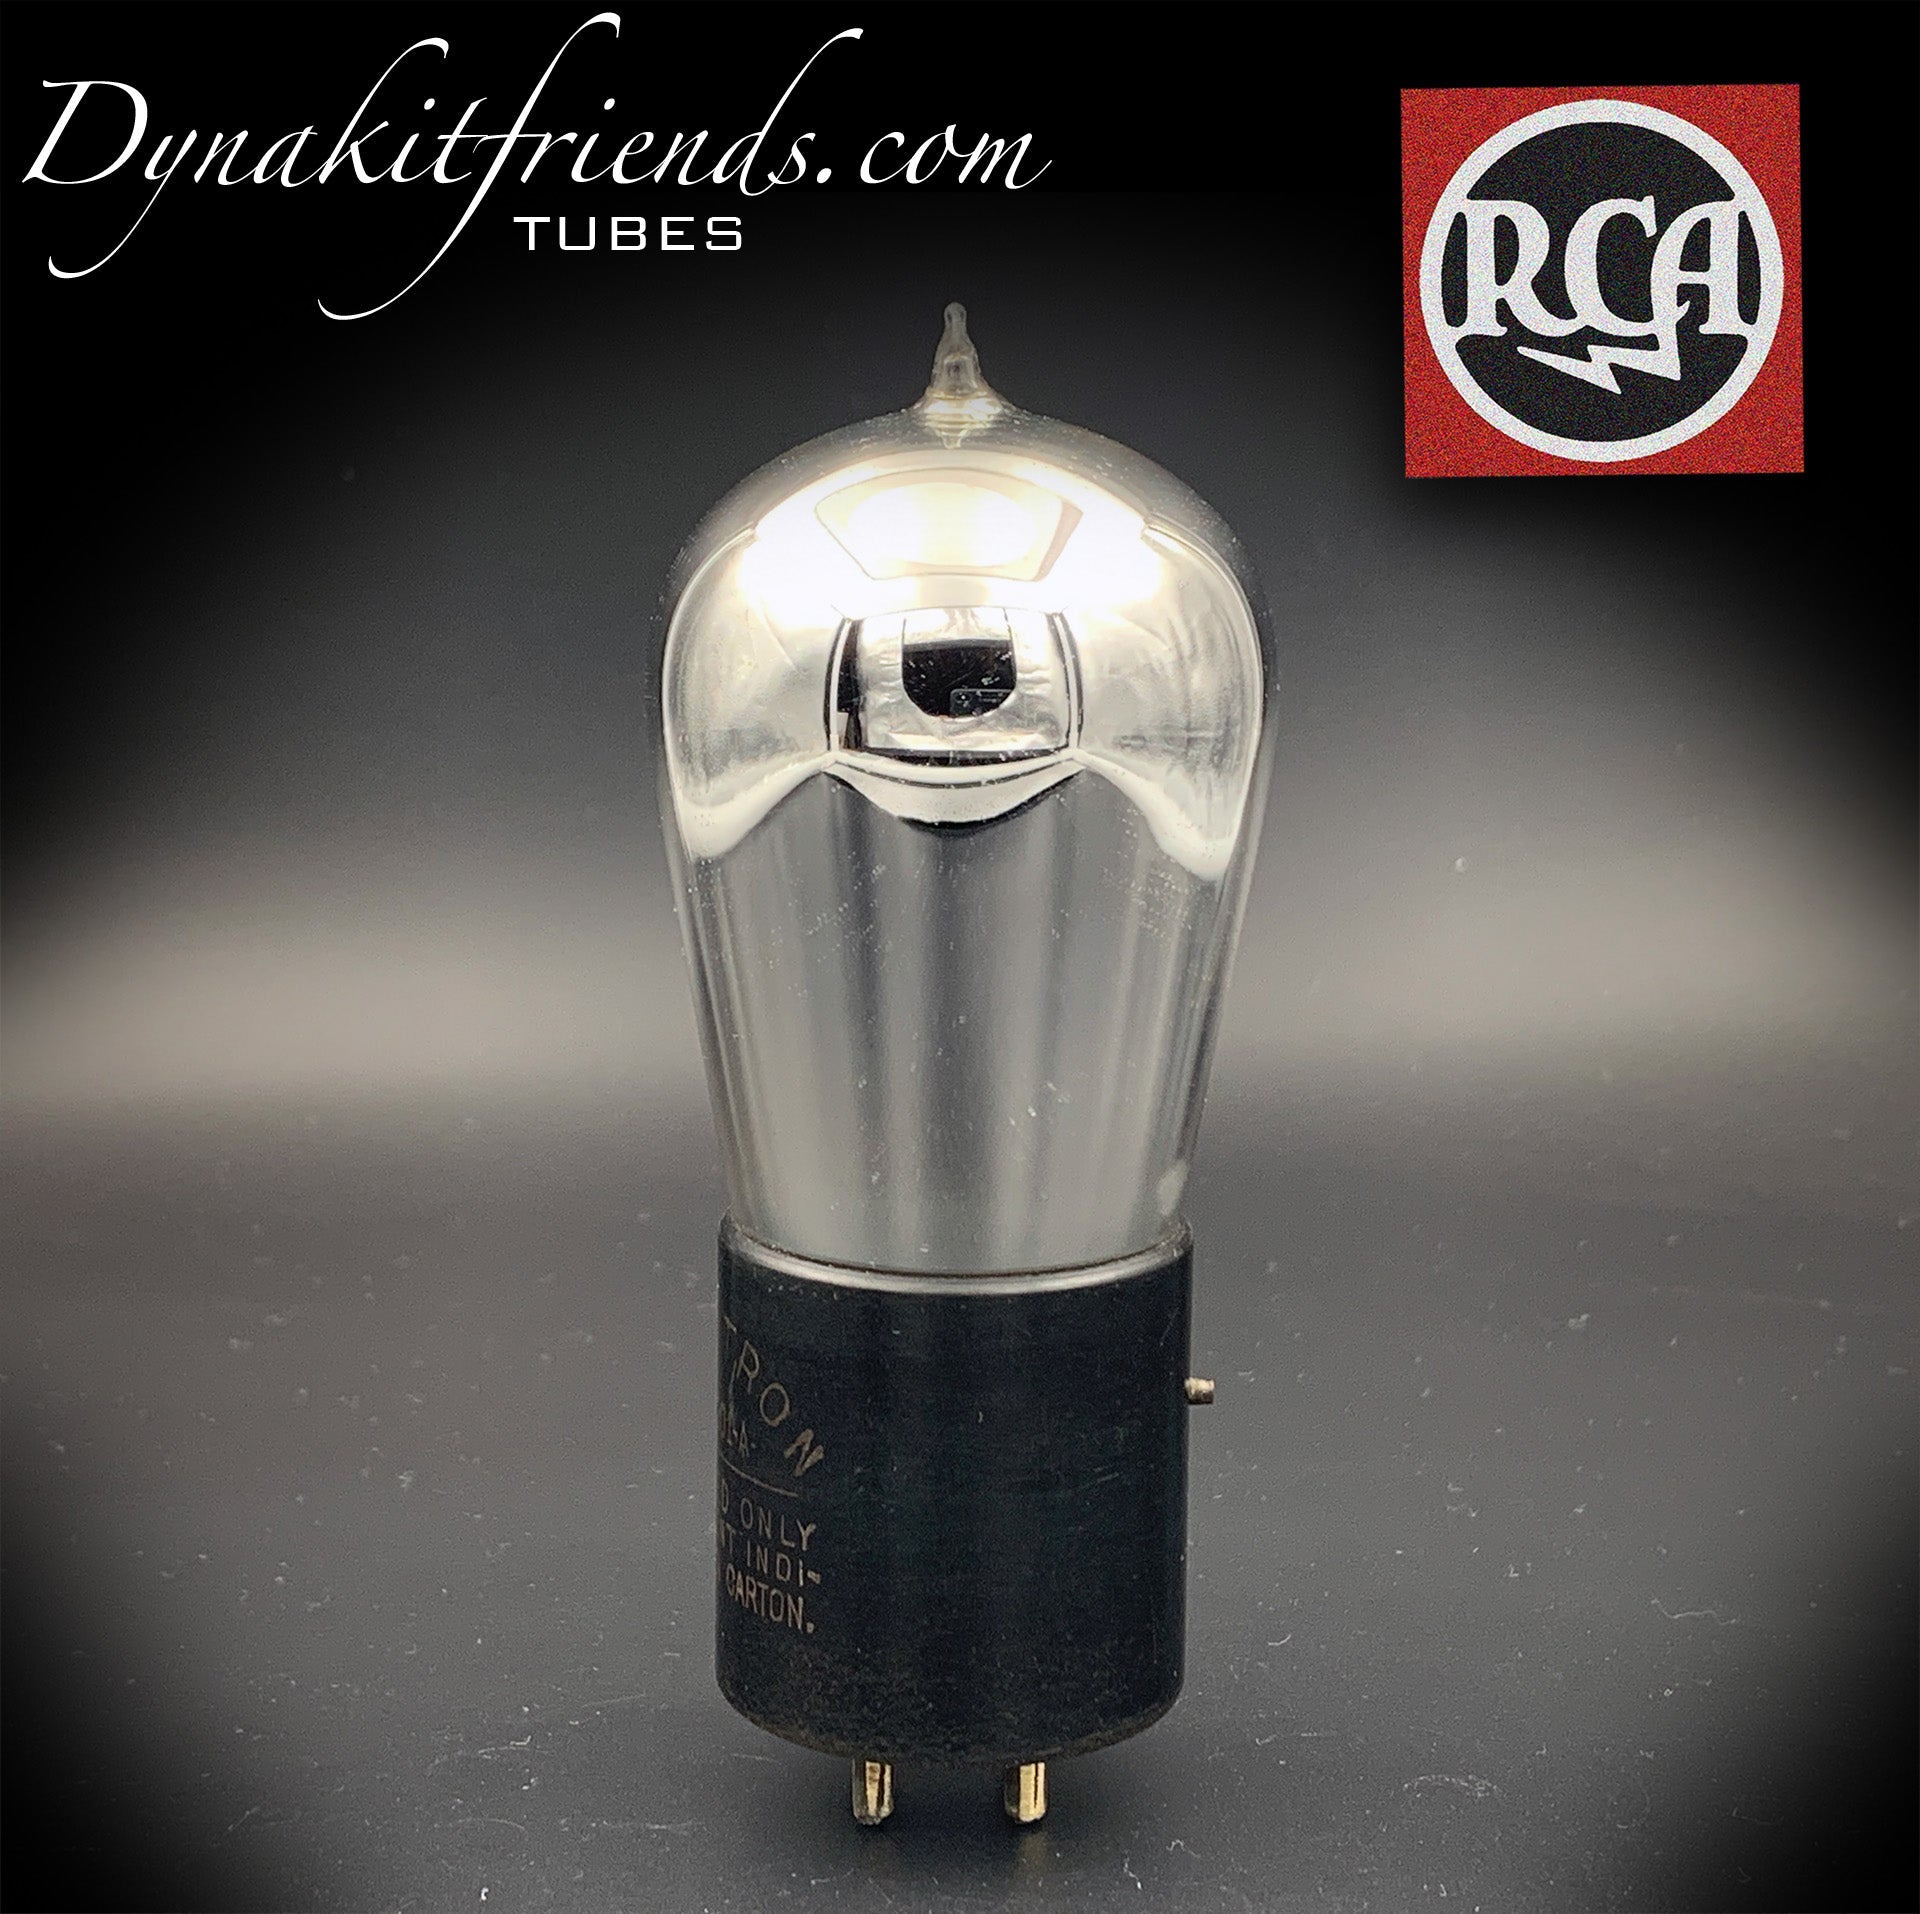 UV-201A ( 01-A ) WESTINGHOUSE LAMP CO. U.S.A. for RCA Radiotron U.S.A Globe Radio Tubes NOS NIB '20s - Vacuum Tubes Treasures